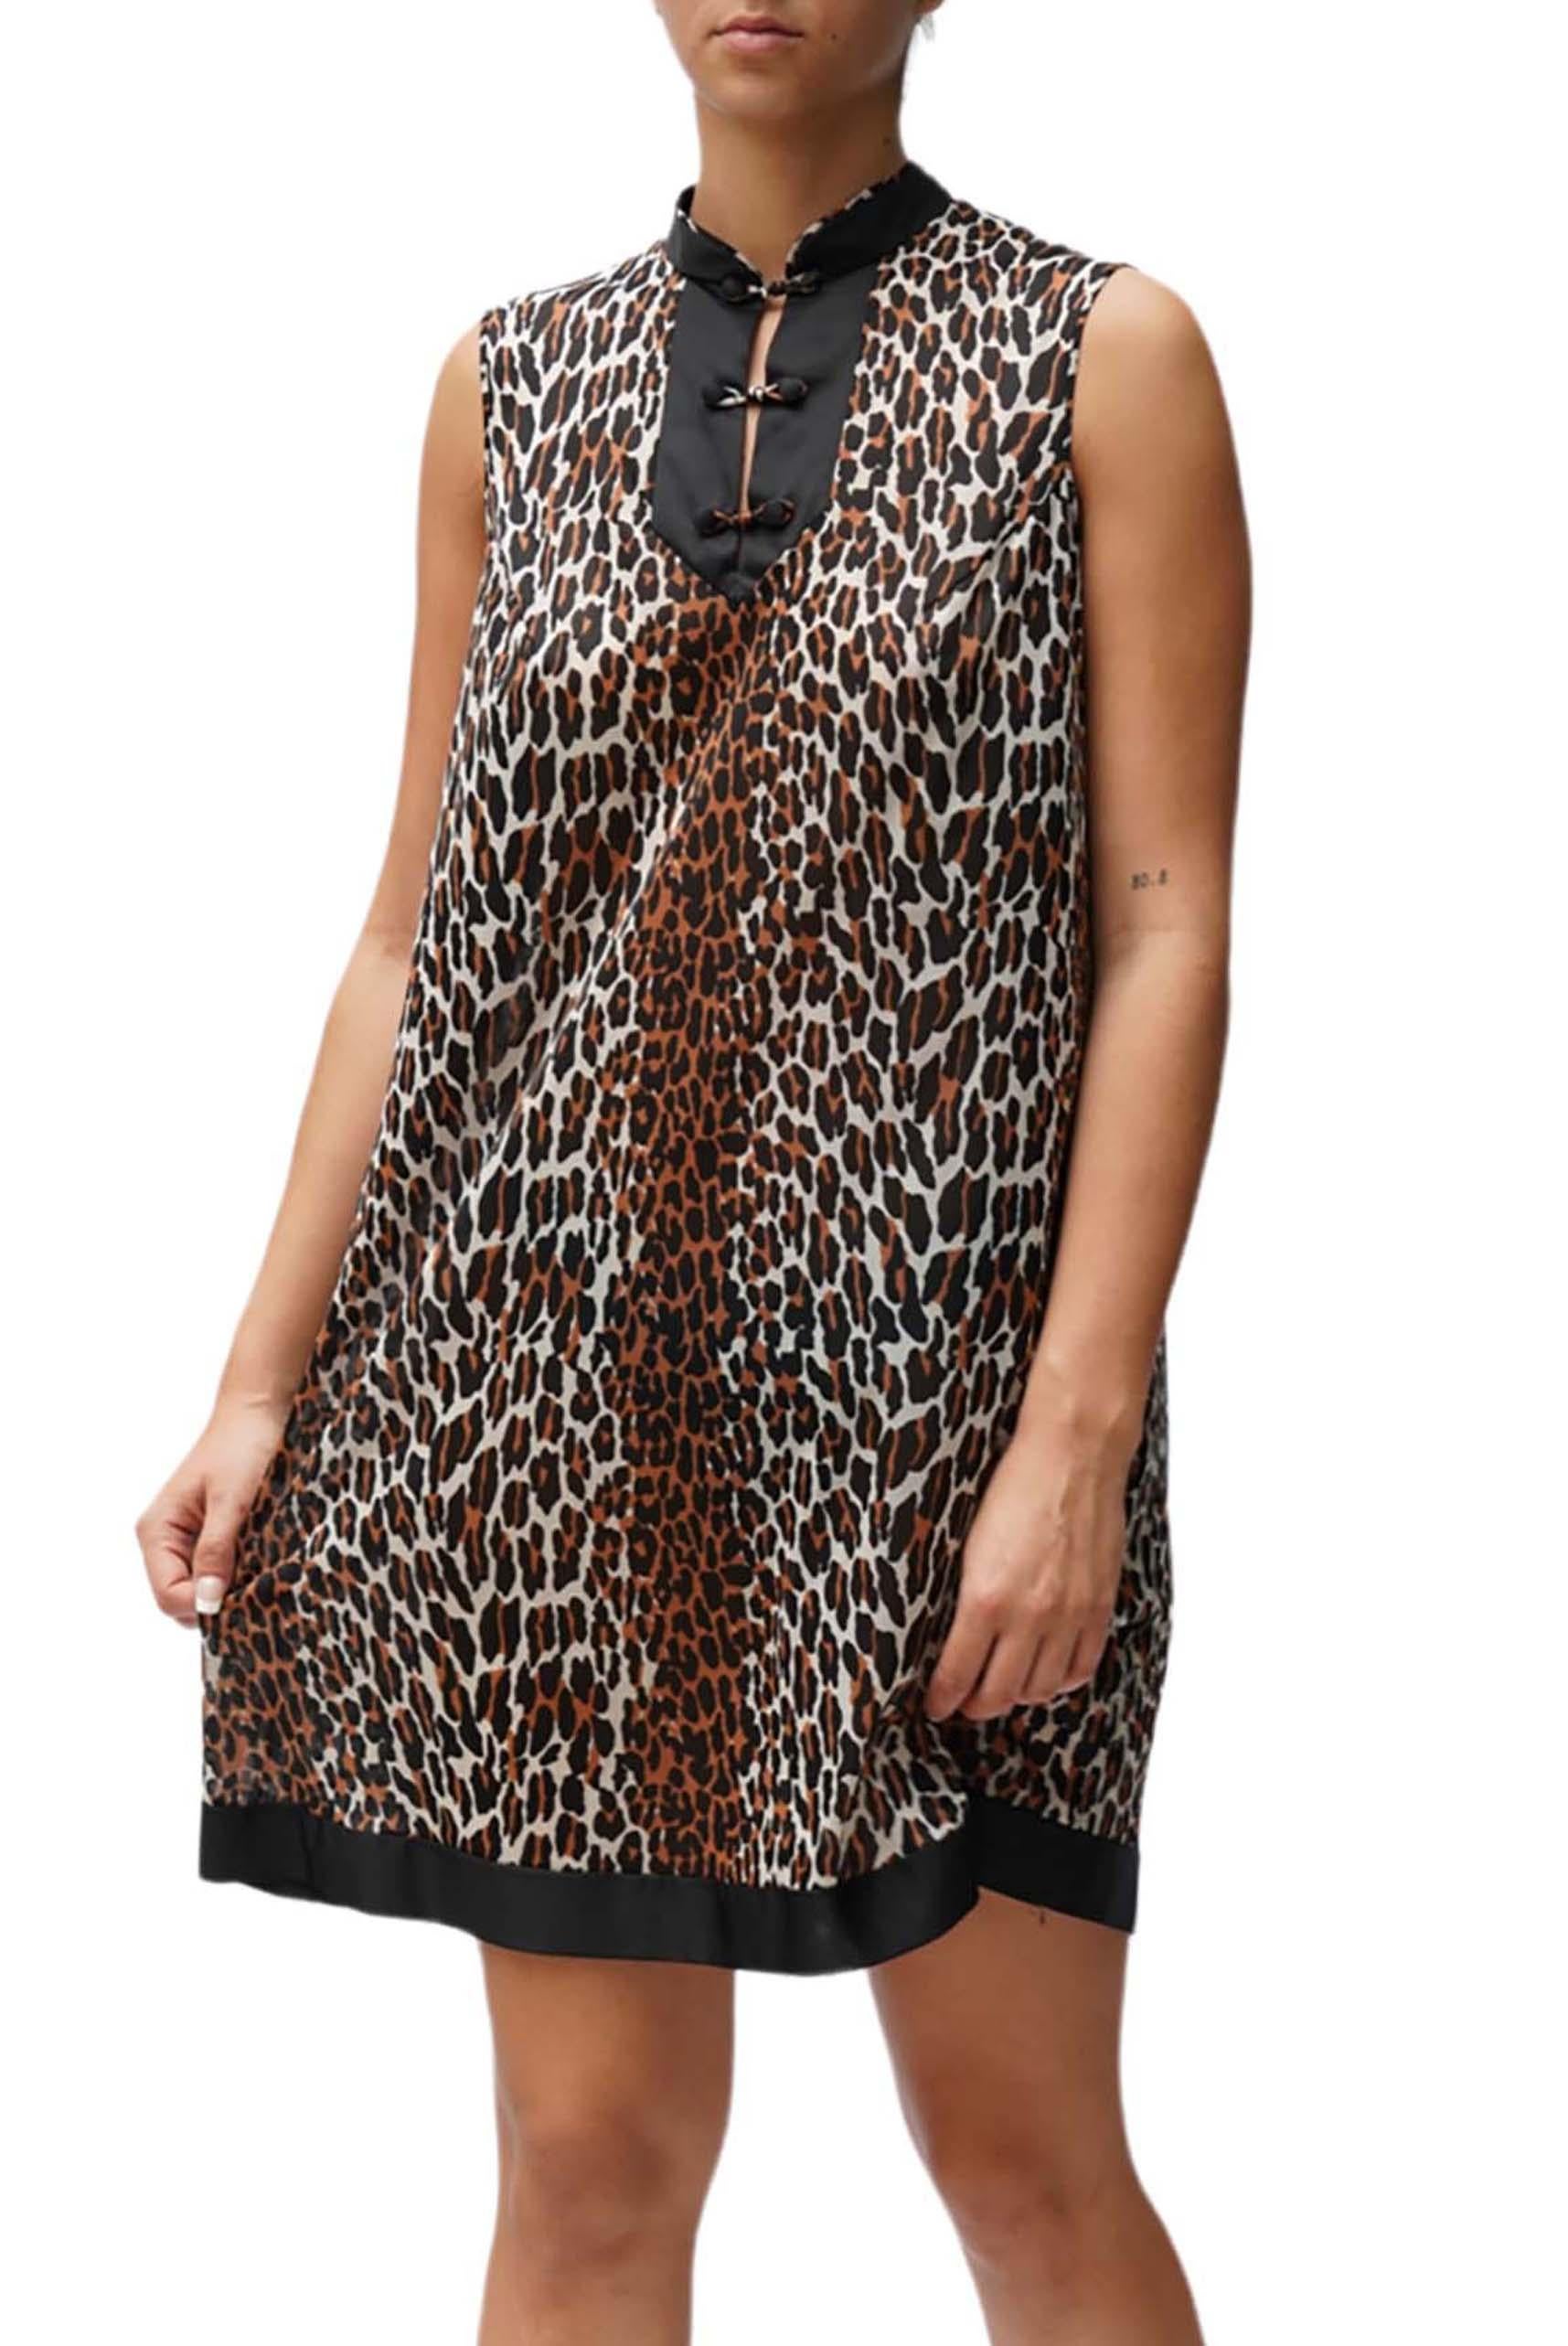 1960S Leopard Print Nylon Tricot Jersey Mod Slip Dress Negligee For Sale 2